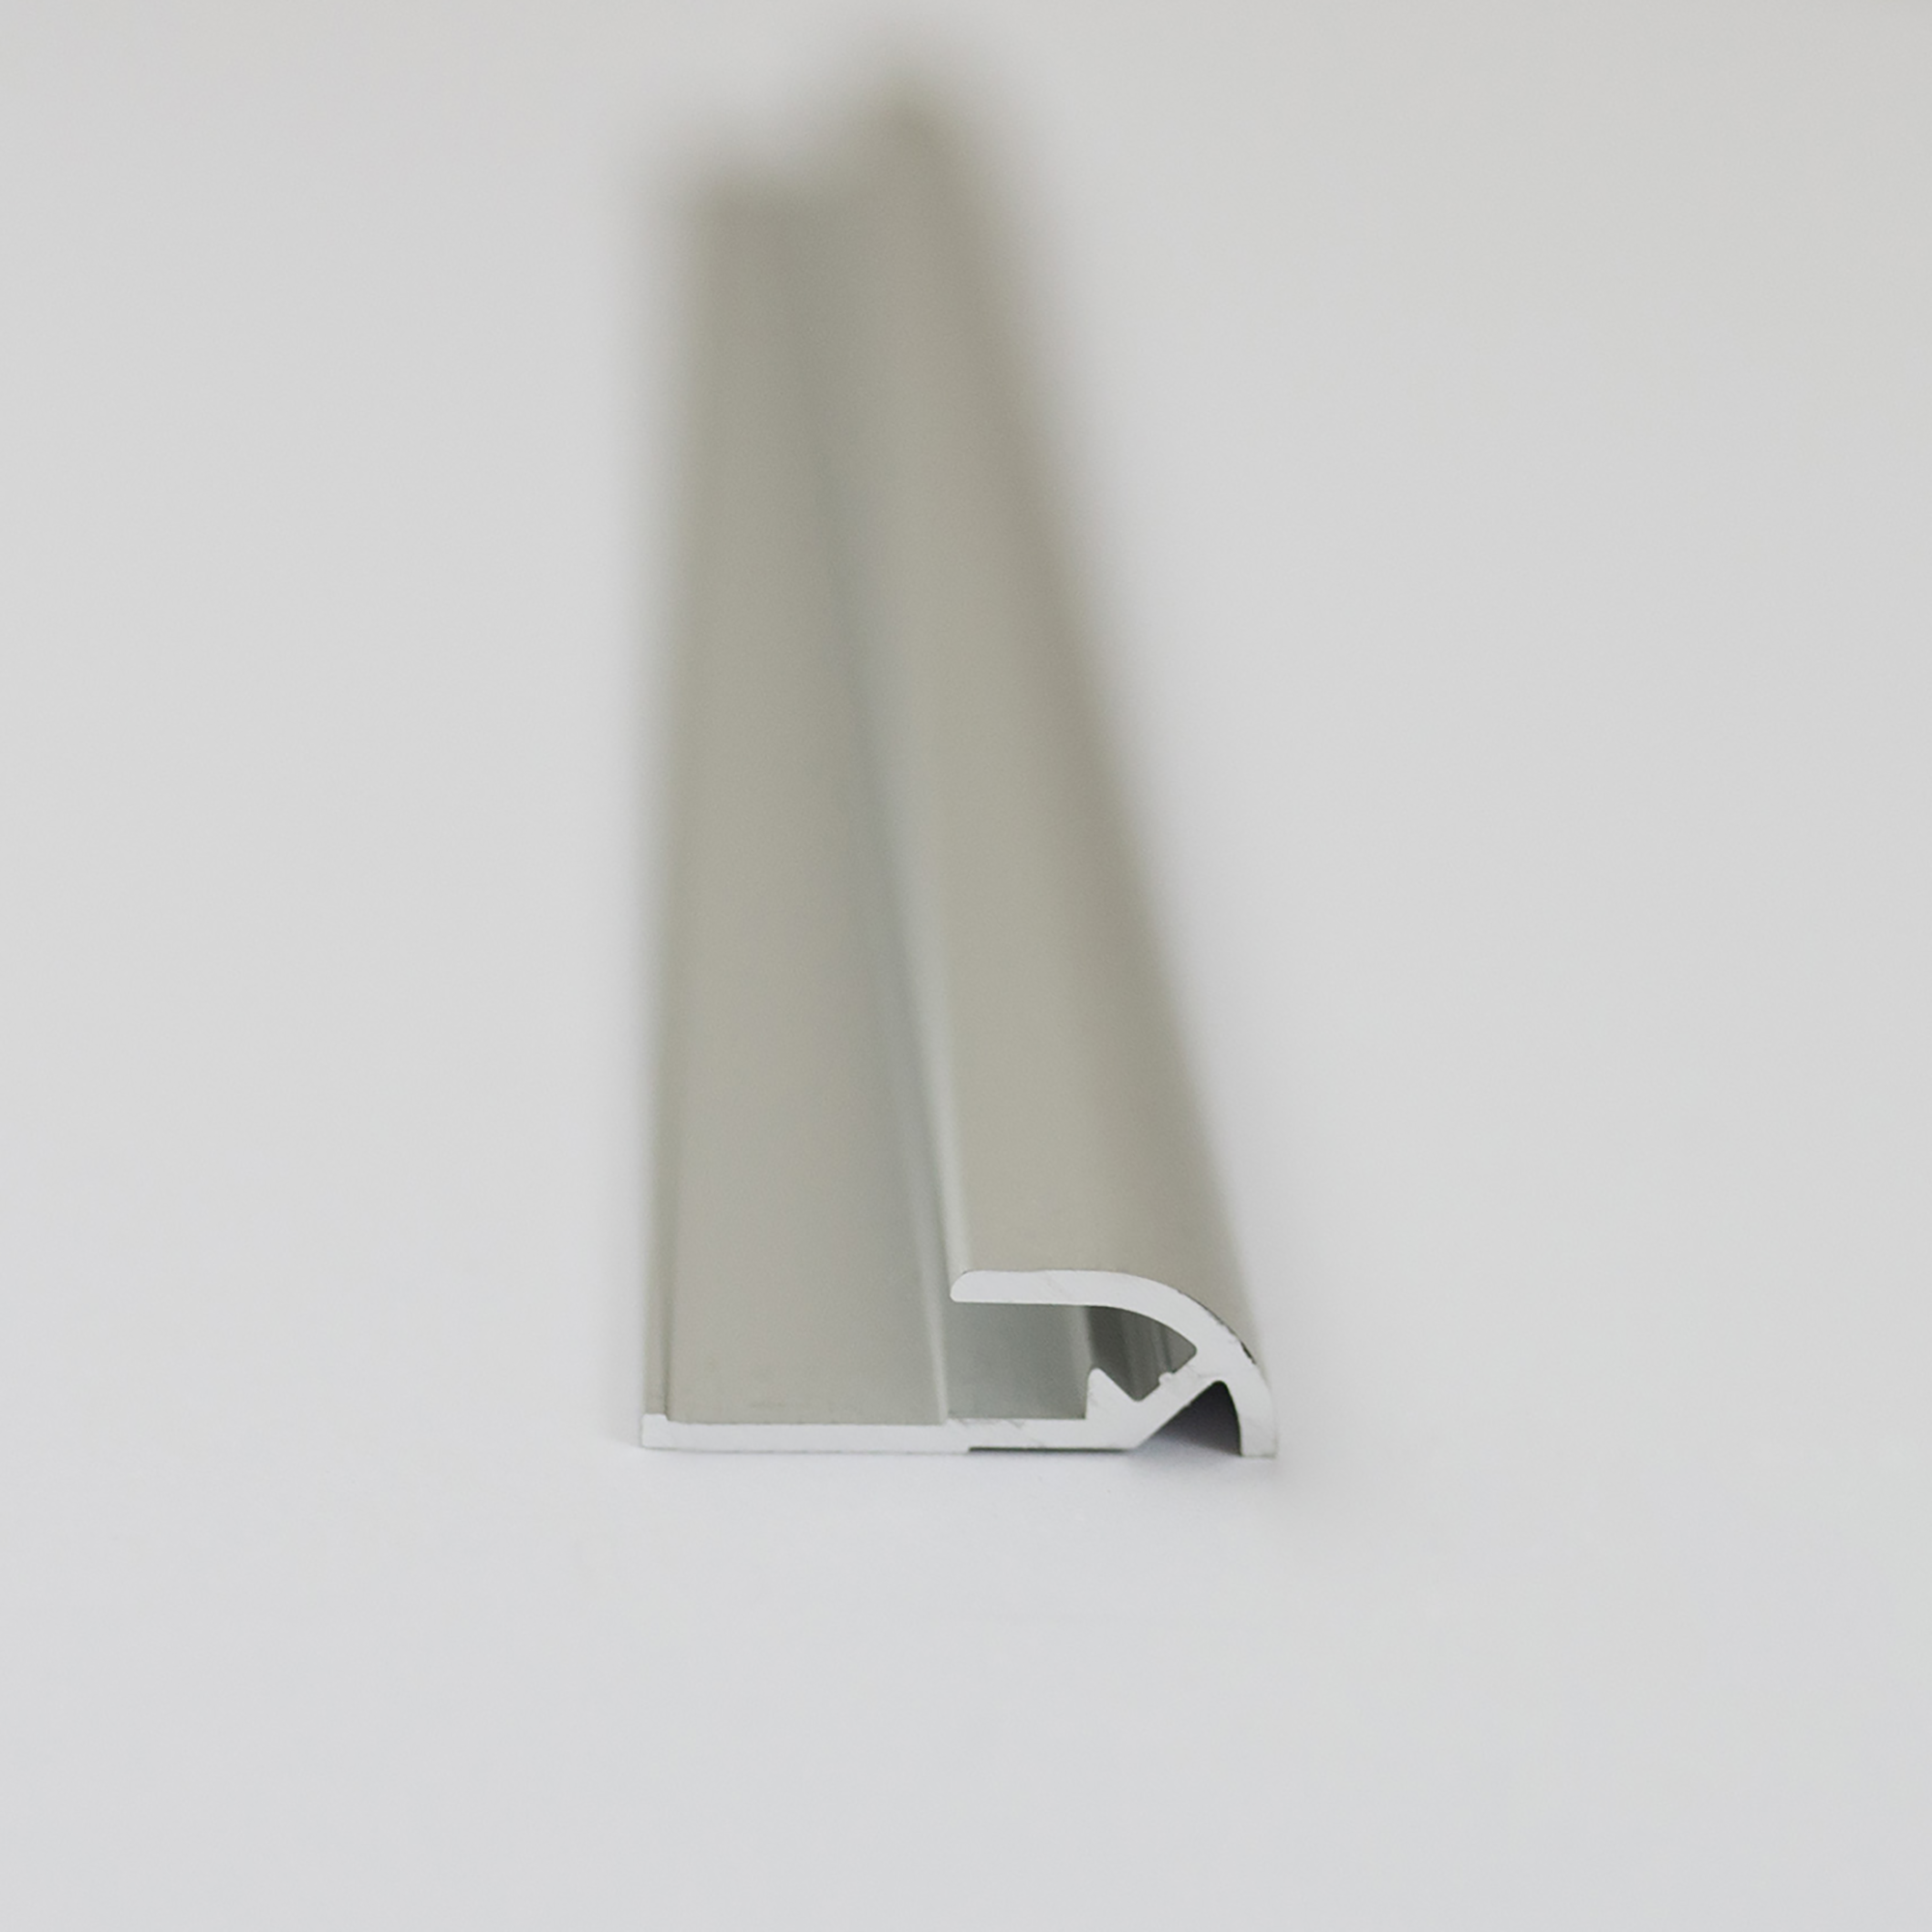 Abschlussprofil für Rückwandplatten, rund, alu silber matt, 2100 mm + product picture